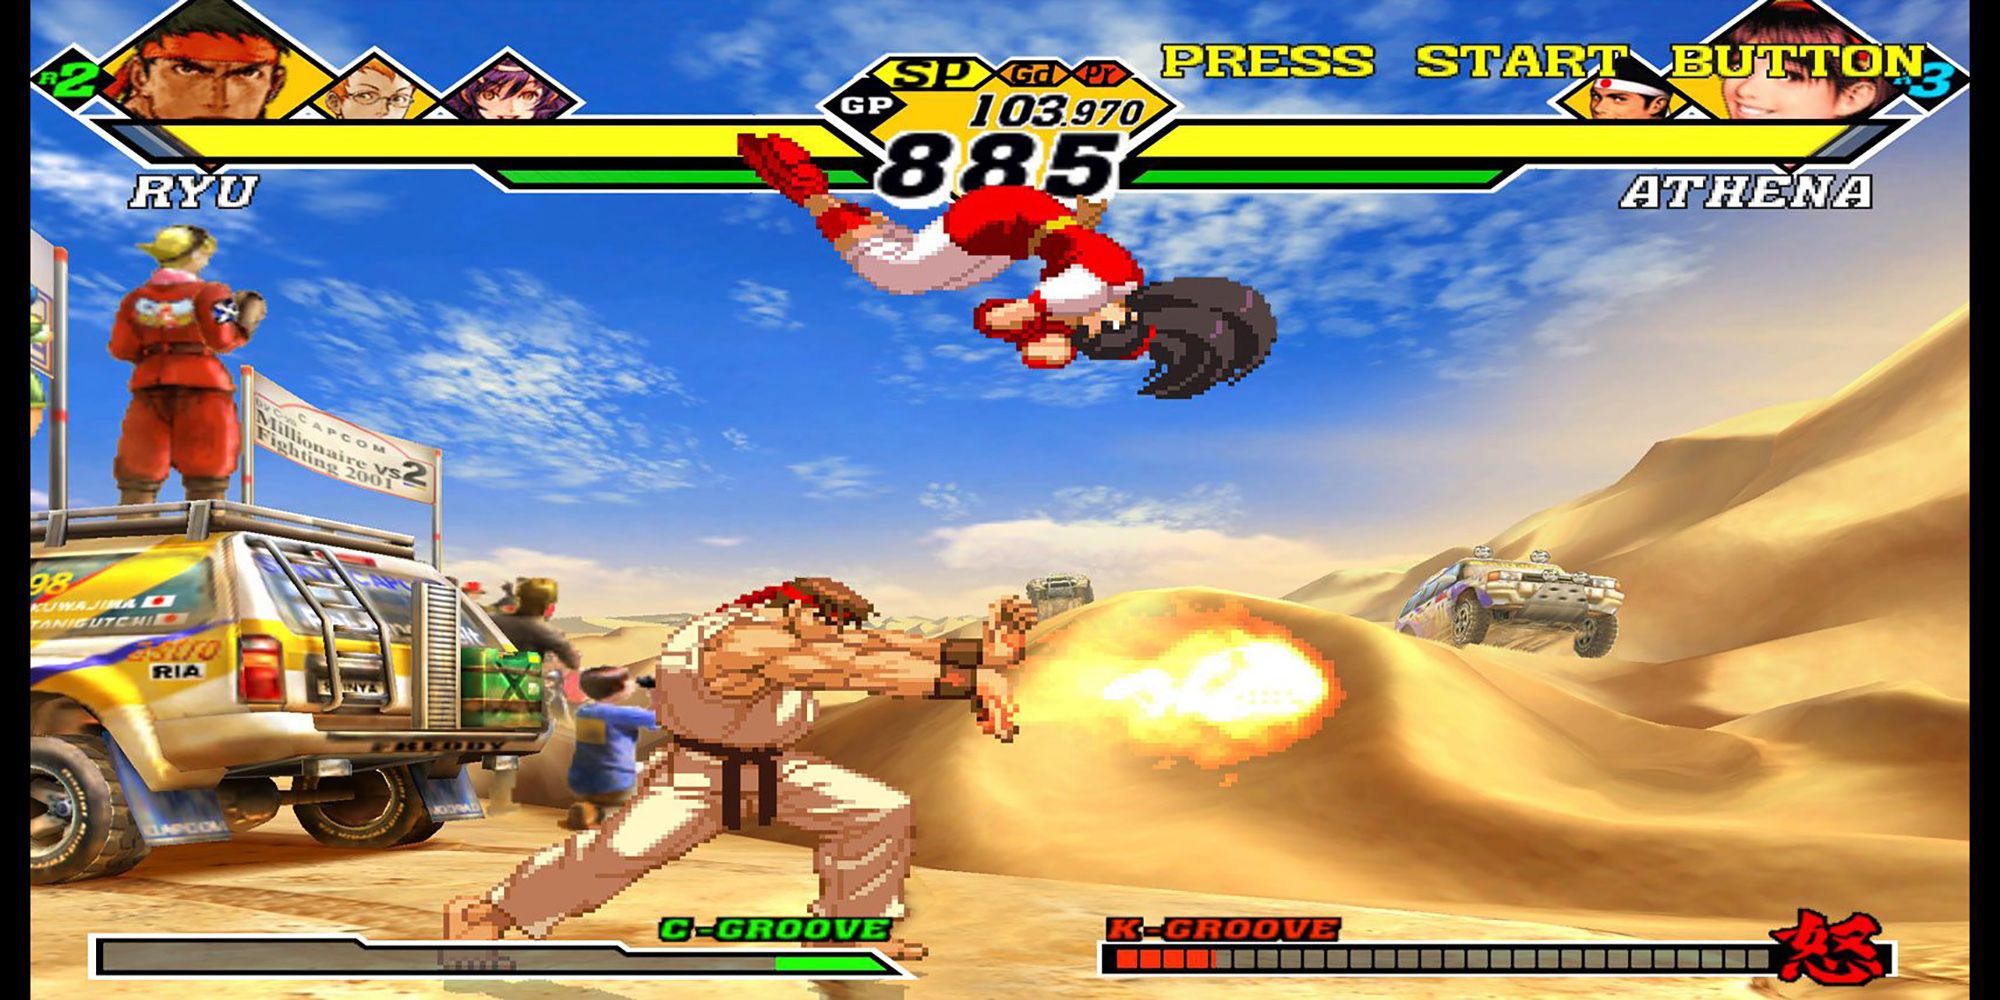 Athena dodges Ryu's hadoken in a battle in a desert in Capcom vs. SNK 2.